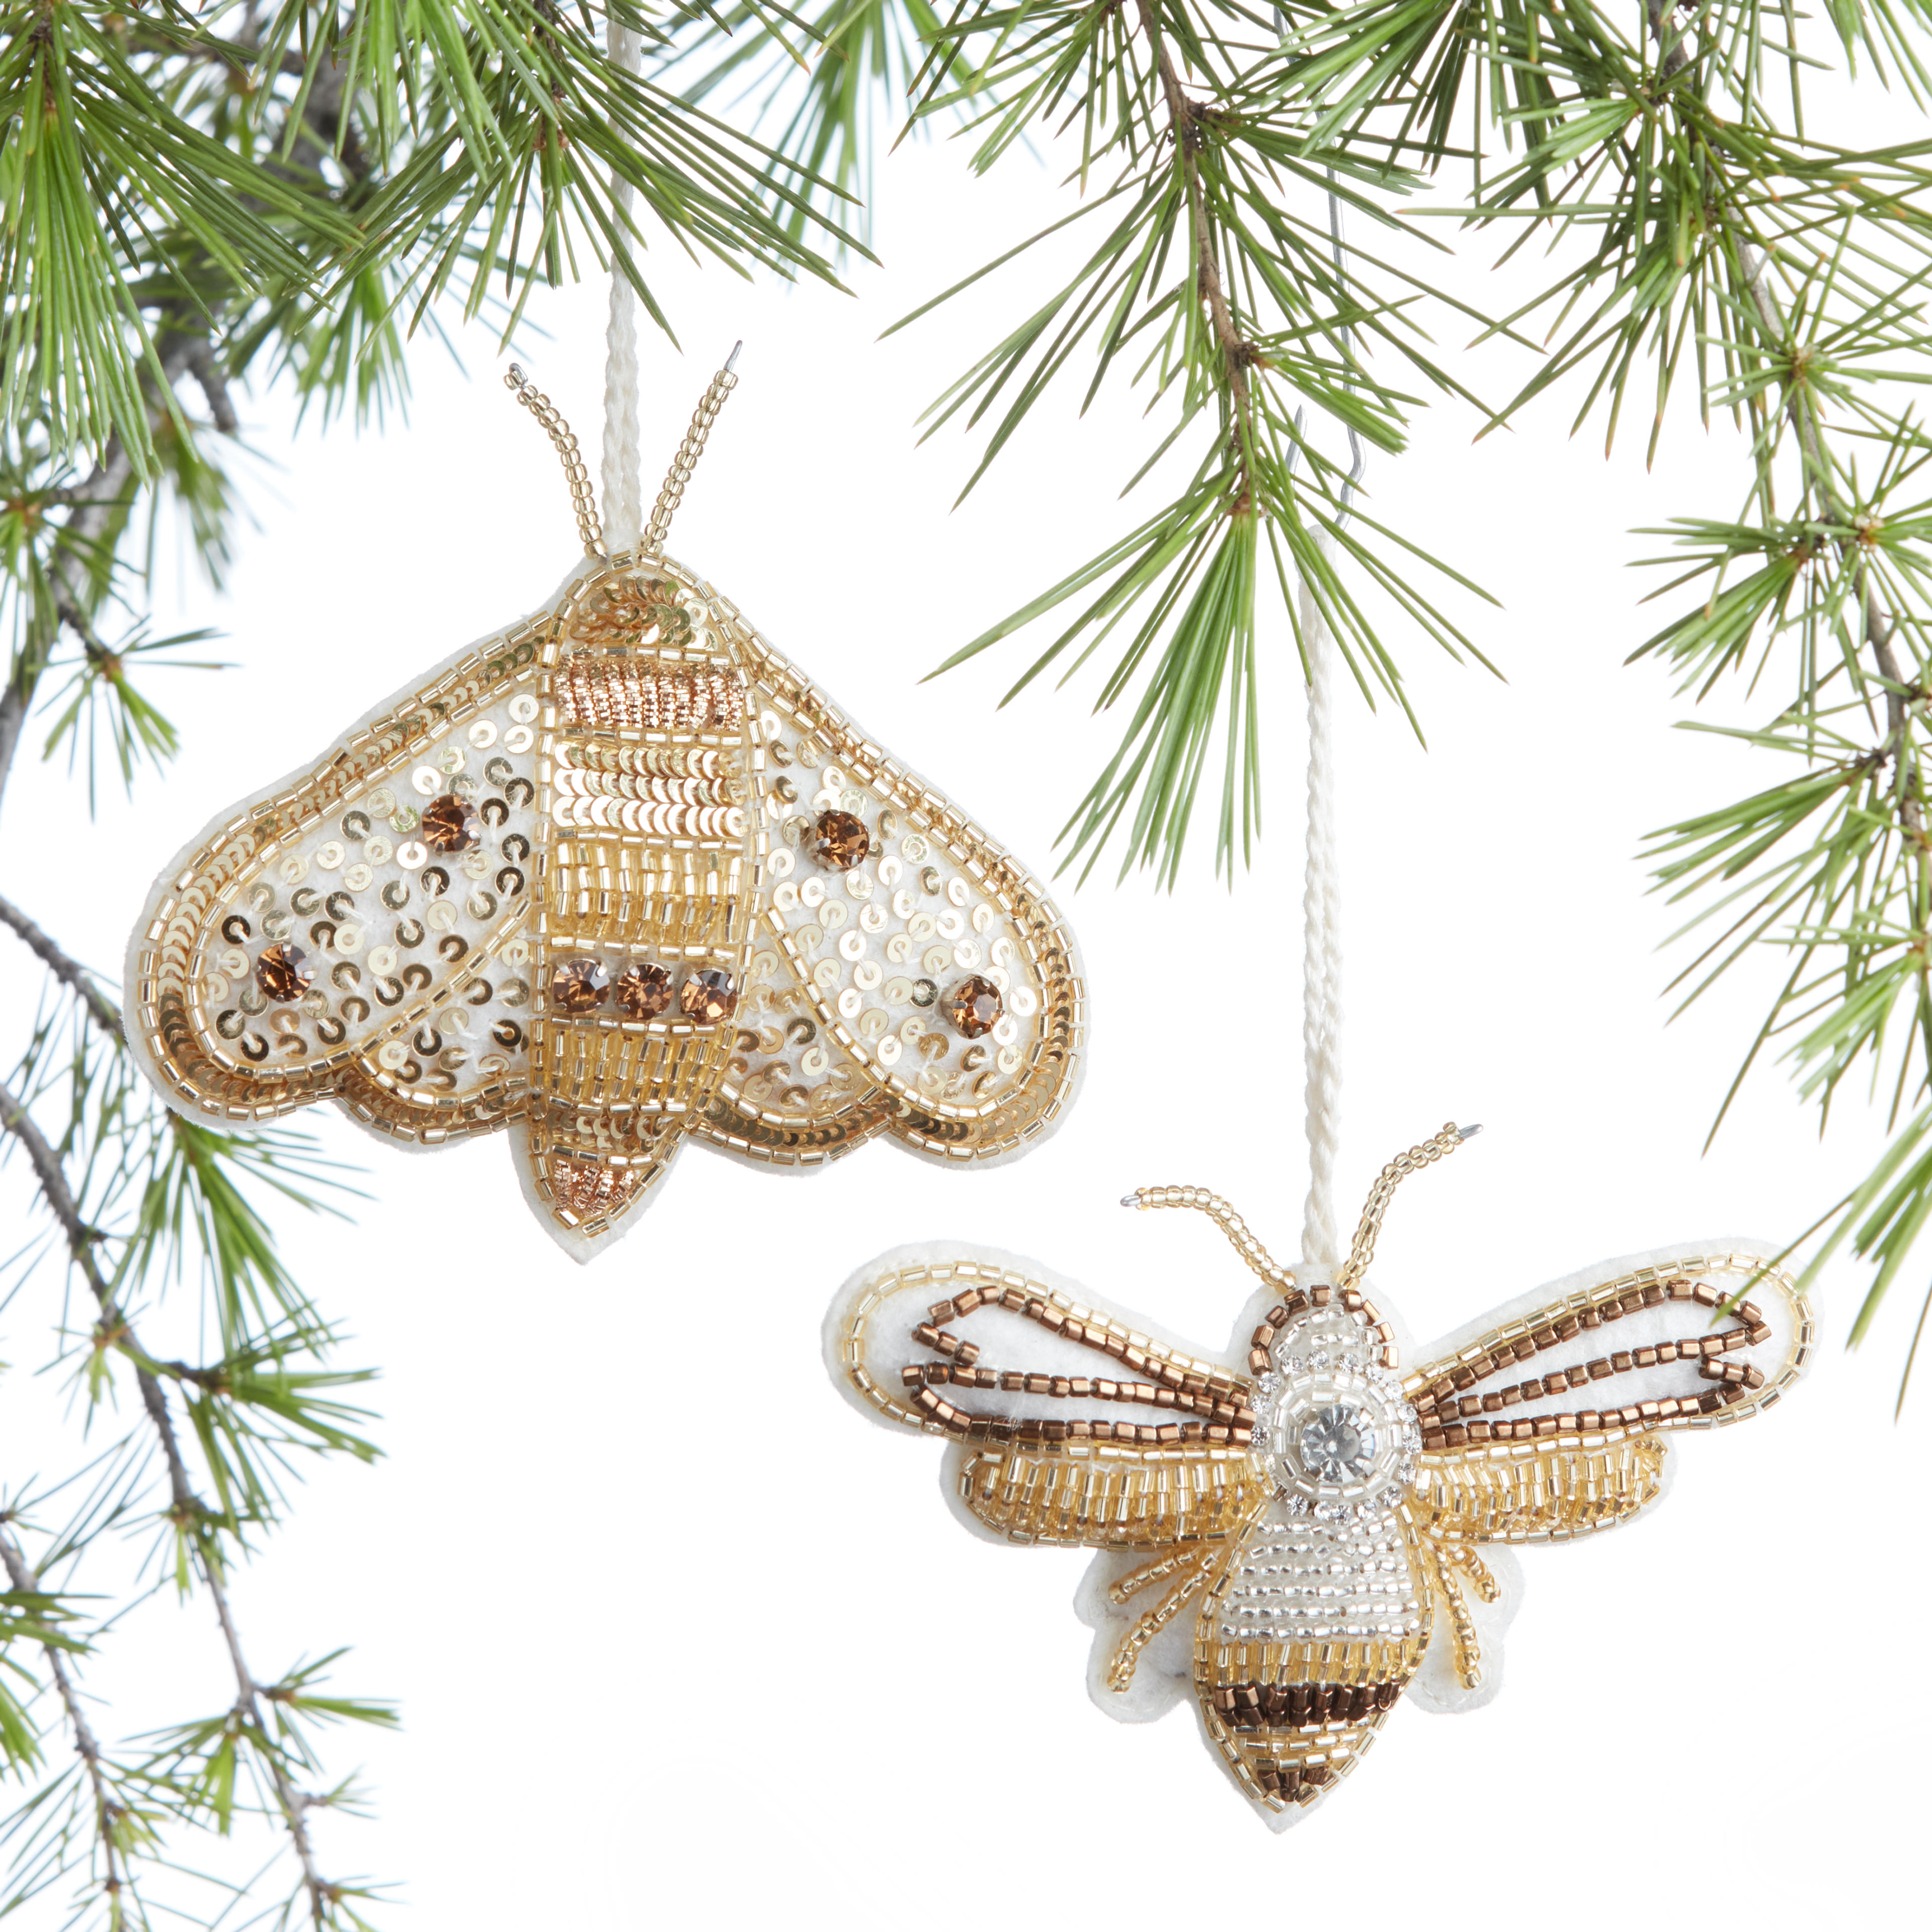 Beaded Wool Bug Ornaments Set Of 2